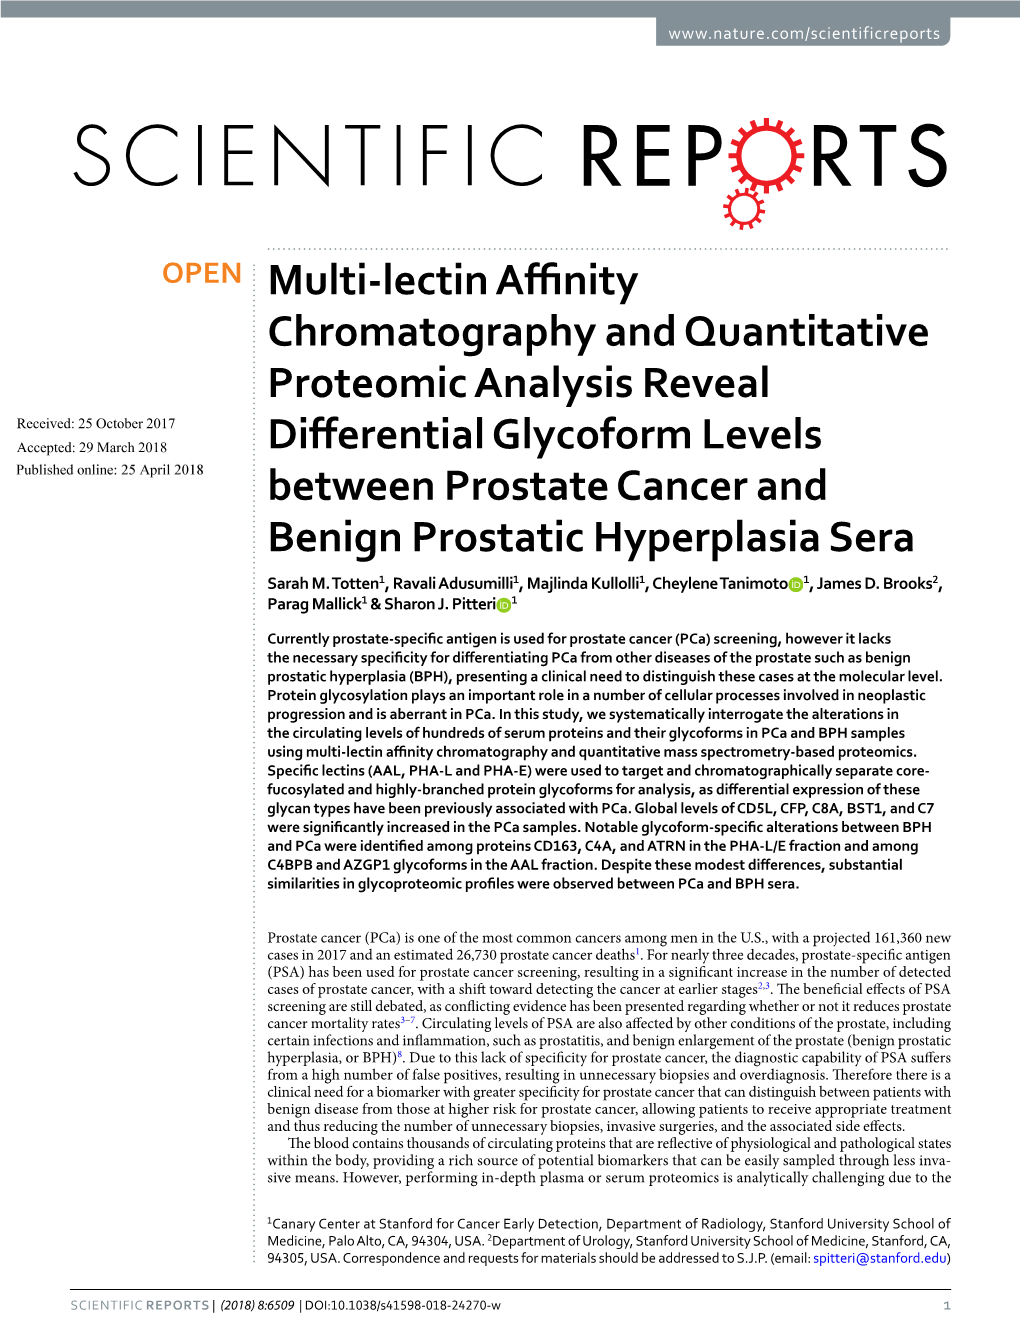 Multi-Lectin Affinity Chromatography and Quantitative Proteomic